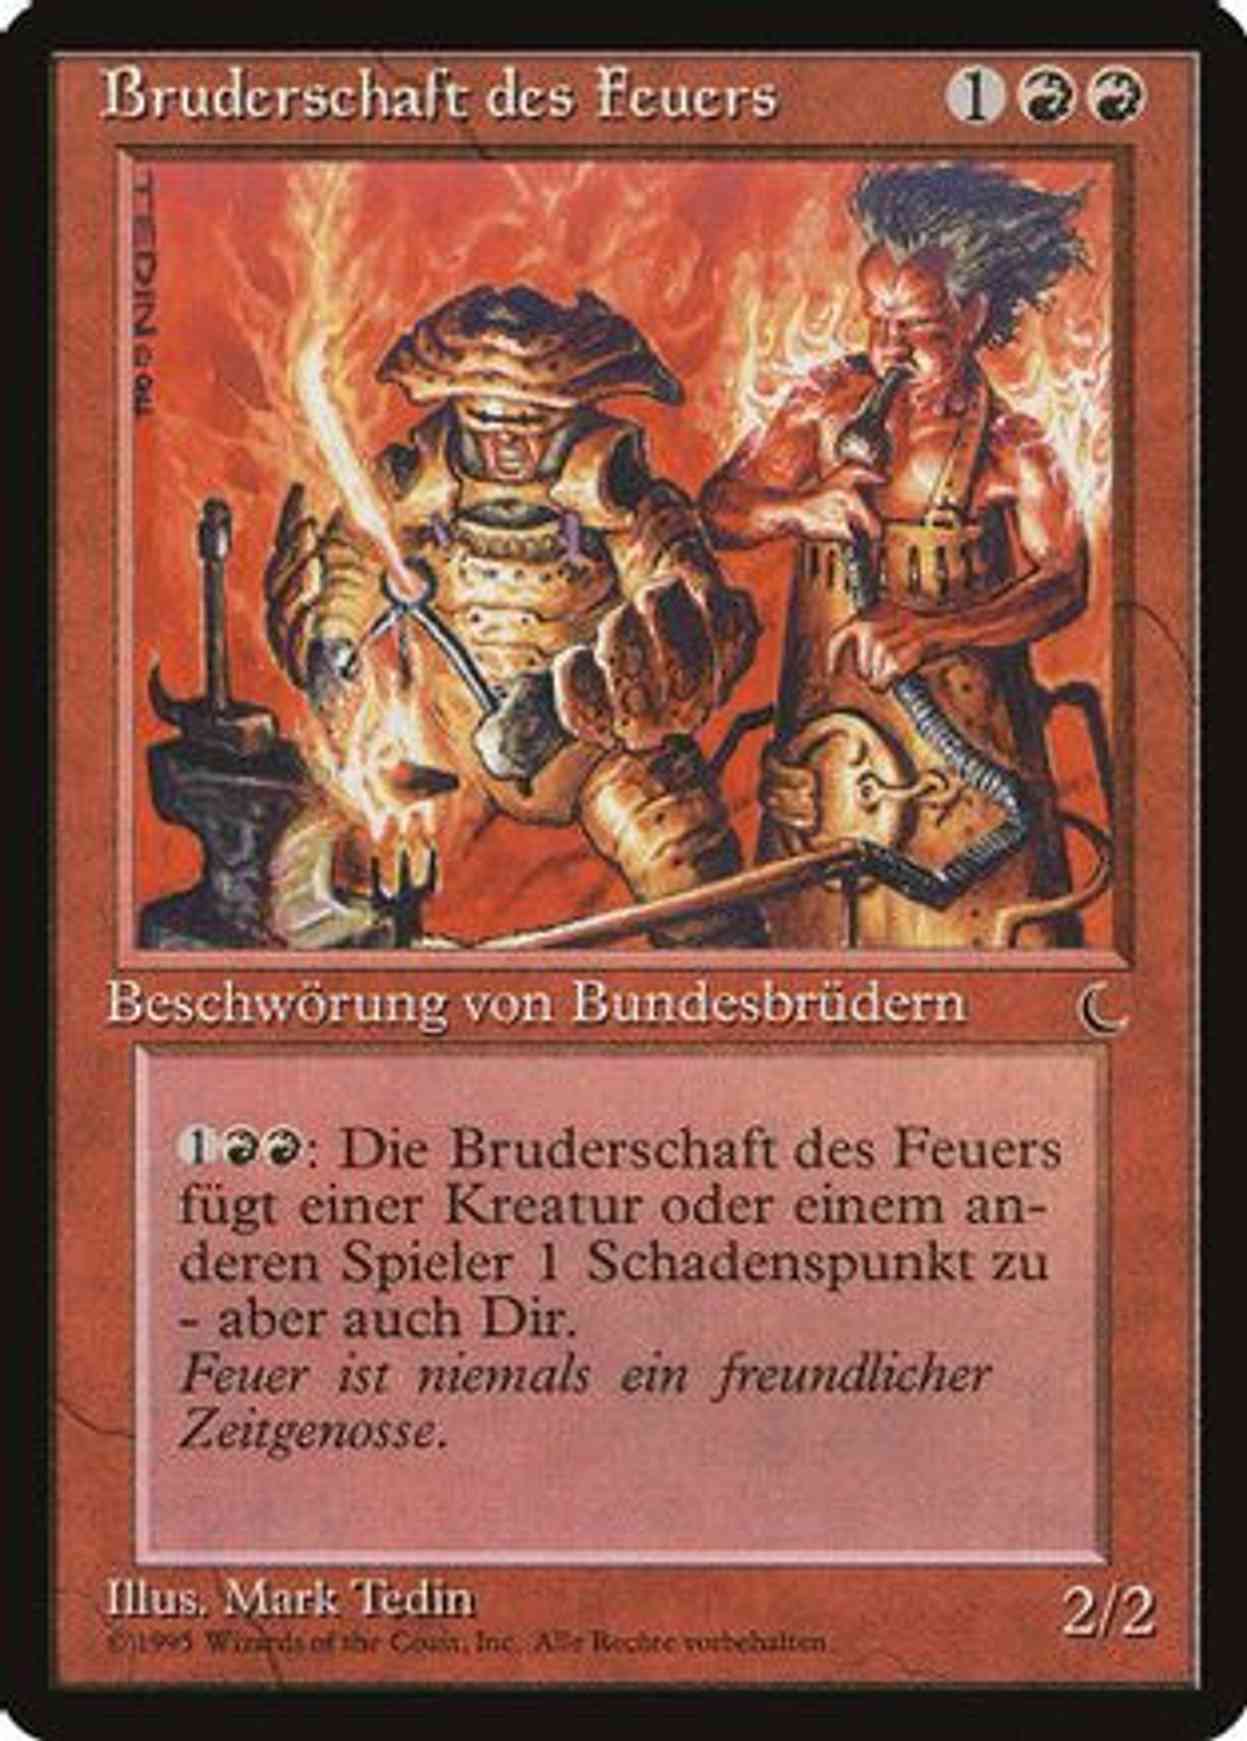 Brothers of Fire (German) - "Bruderschaft des Feuers" magic card front